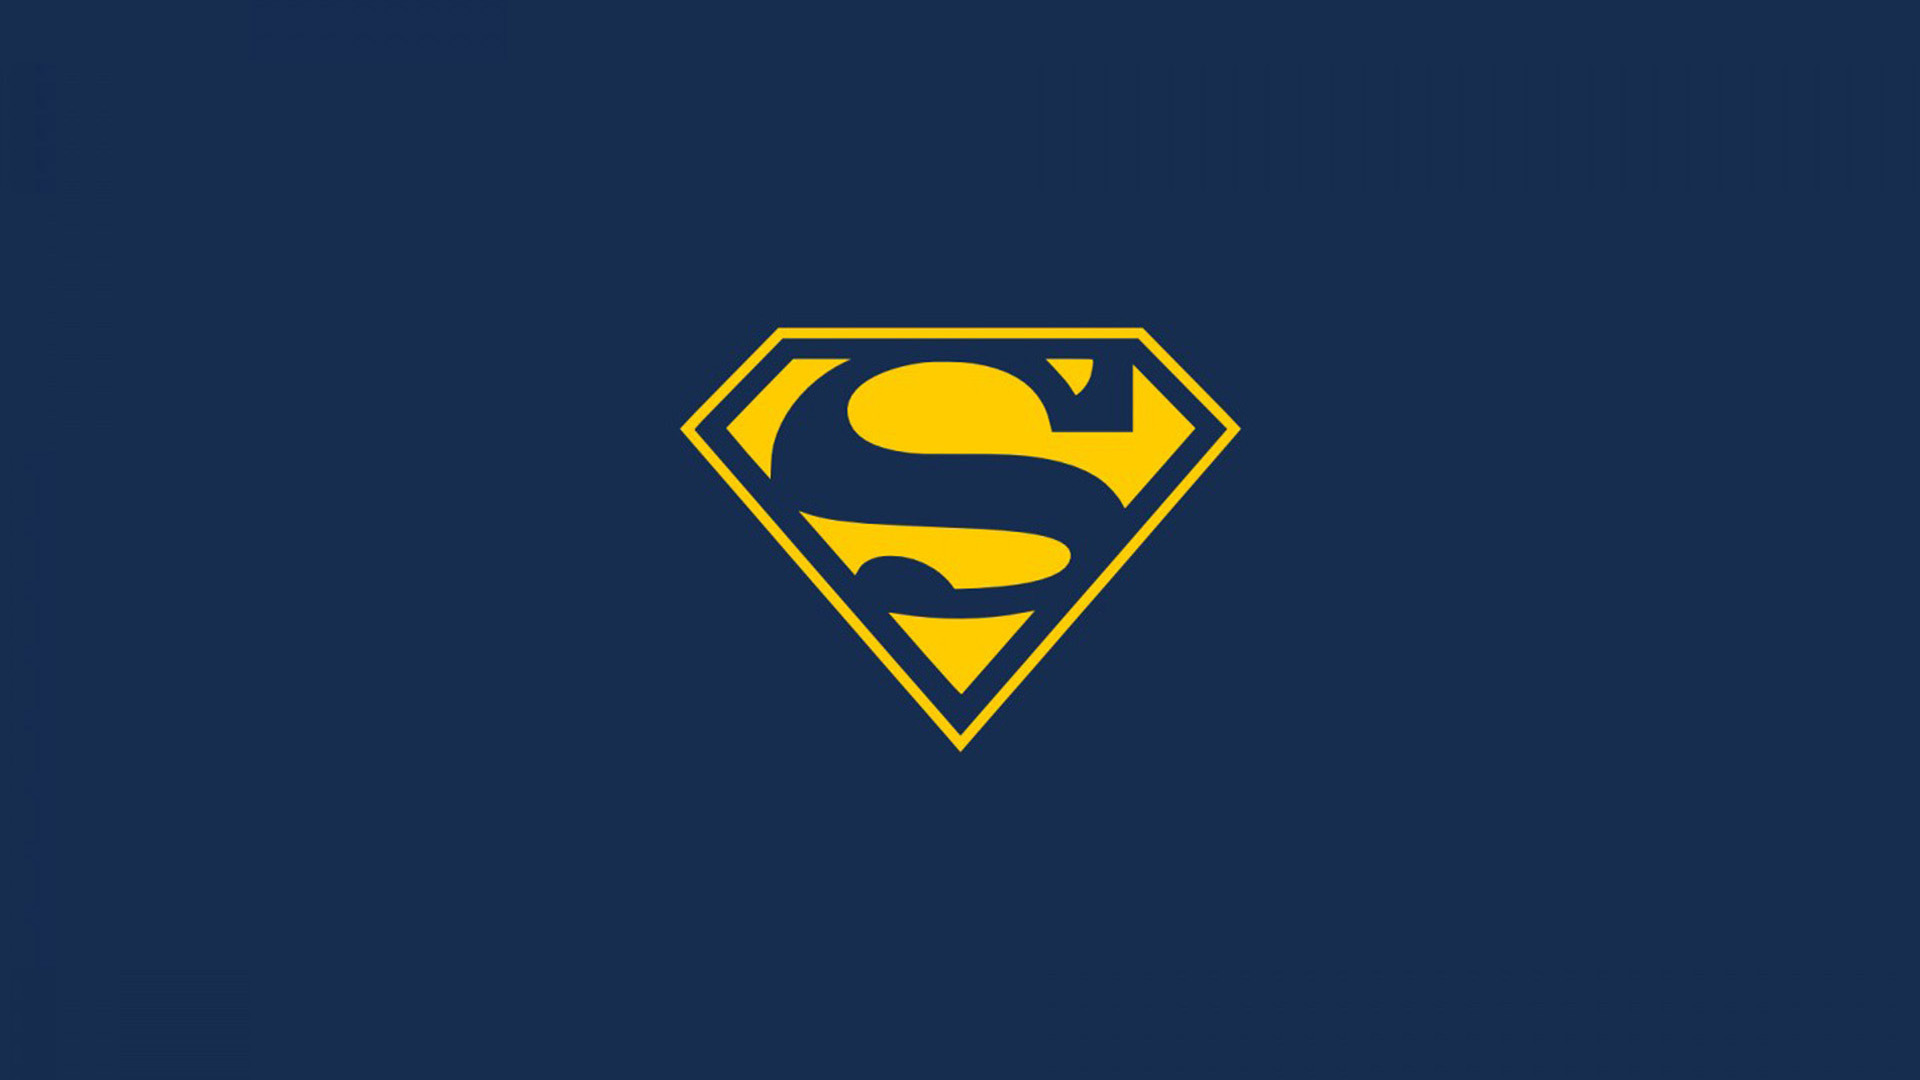 Superman logo wallpaper 08, HD Desktop Wallpapers